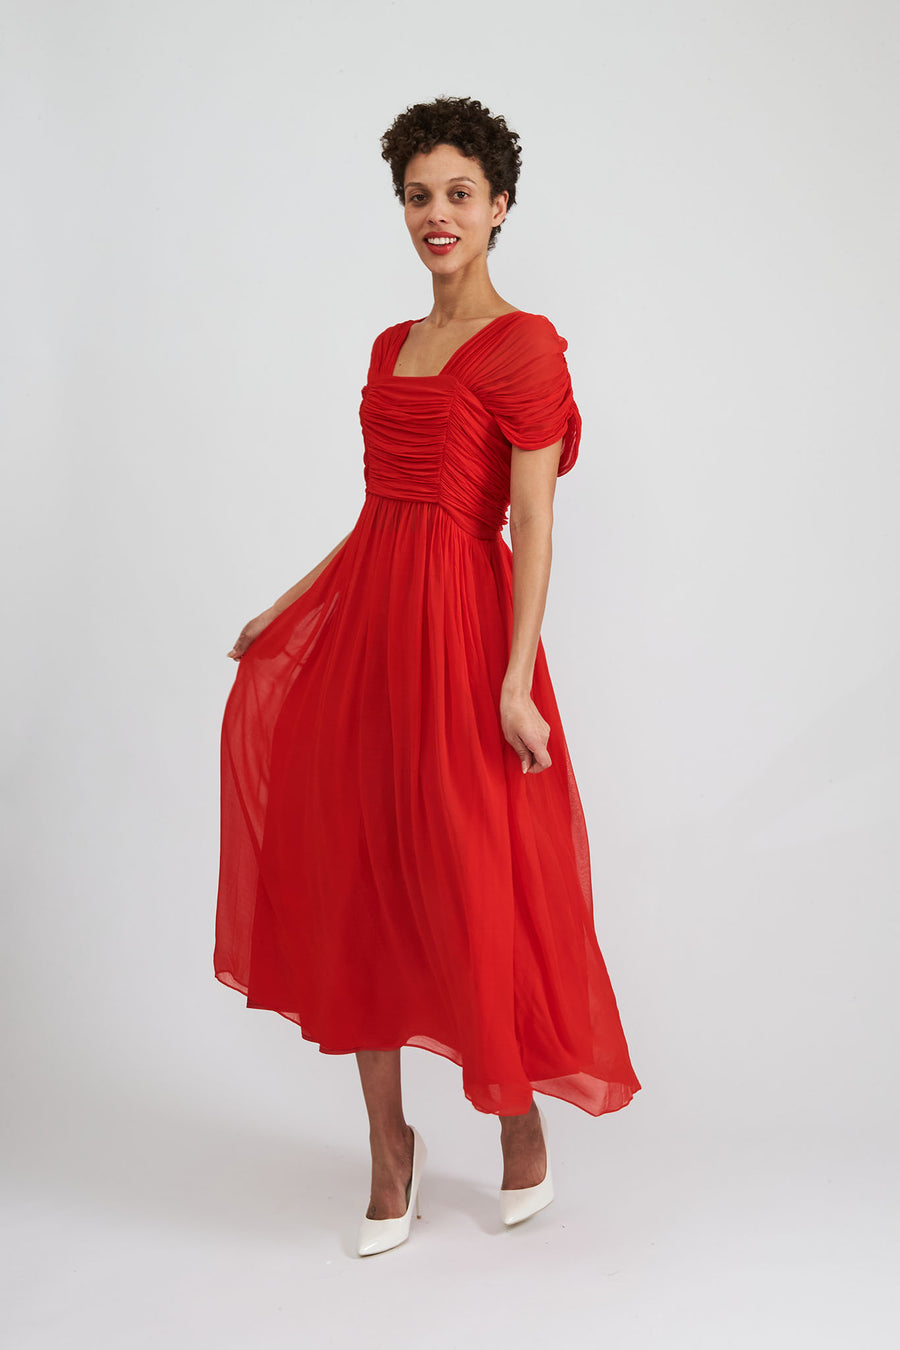 BATSHEVA - Phillipa Dress in Red Chiffon